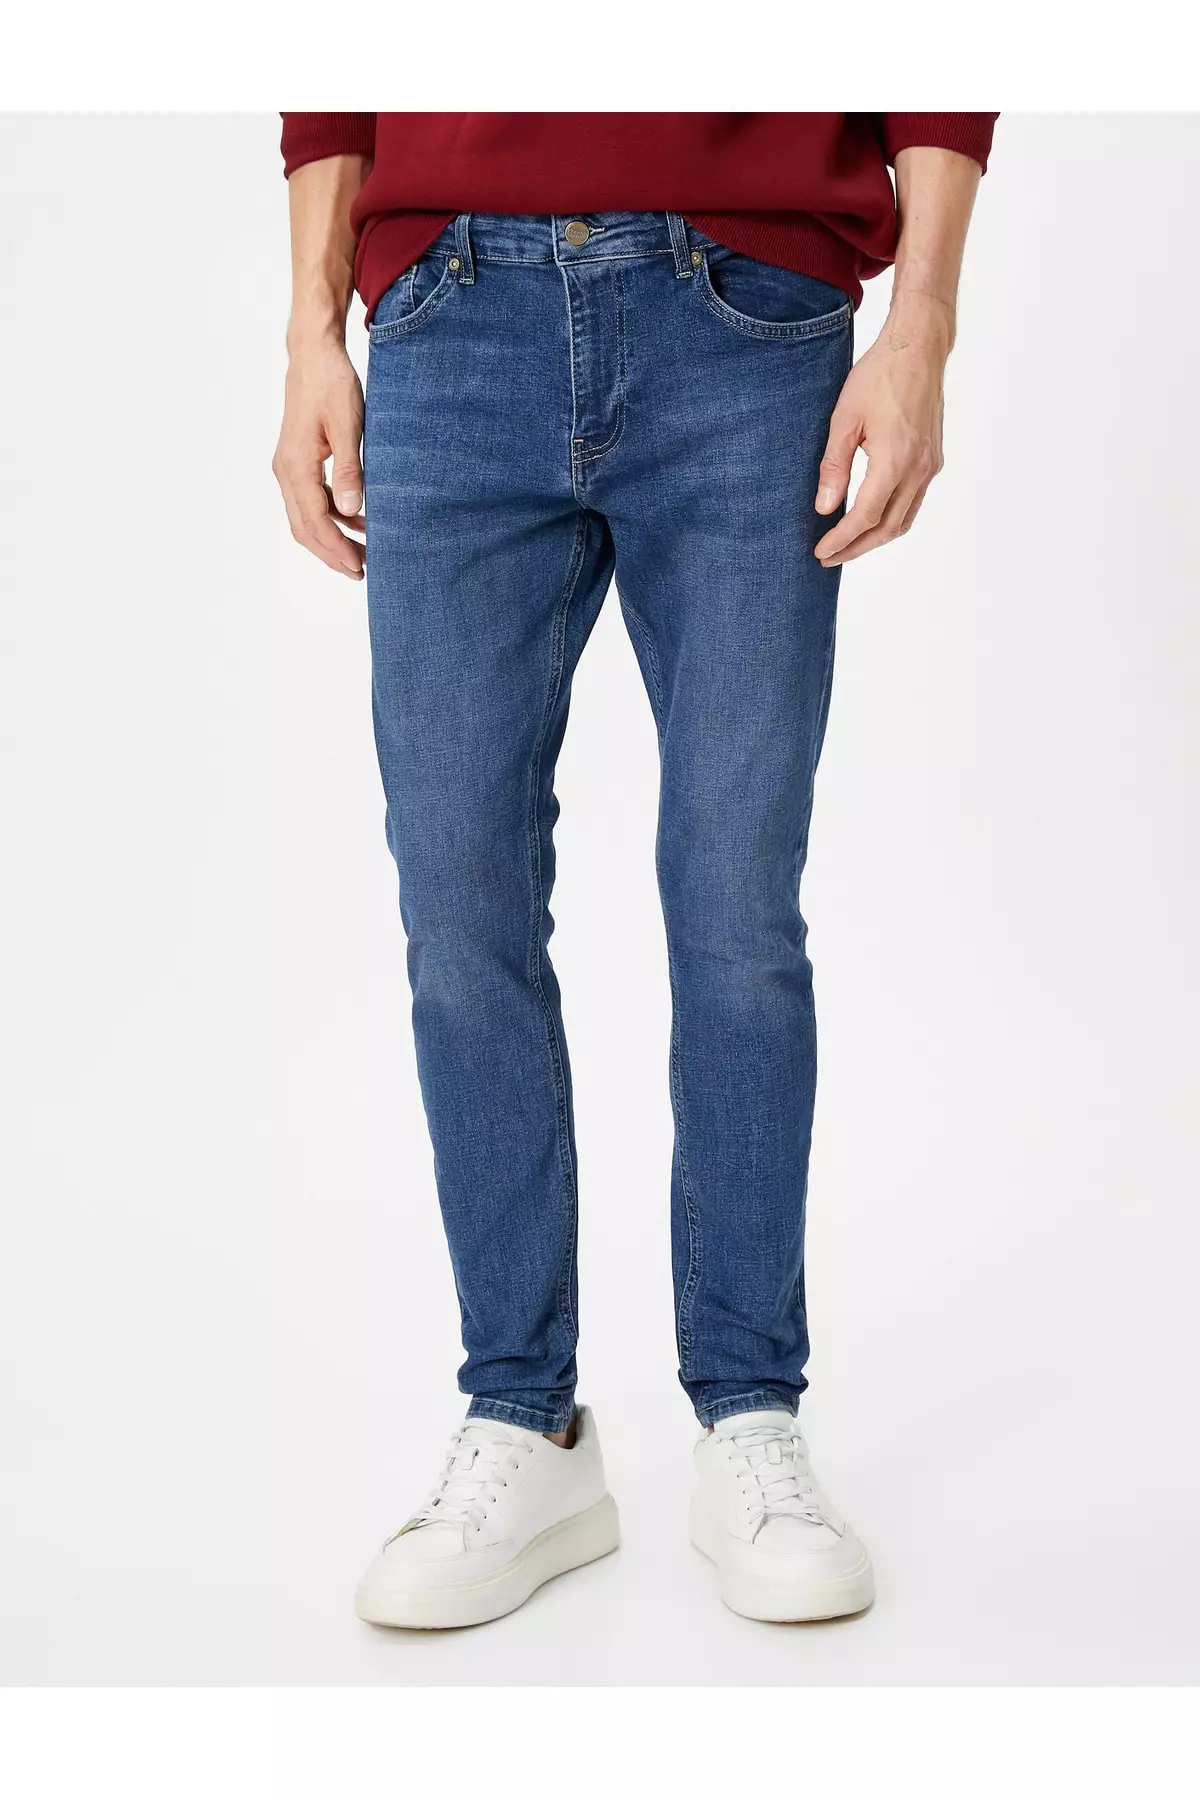 Chevignon Mens Light Indigo Washed Coolmax Stretch Denim Jeans 2024, Buy  Chevignon Online